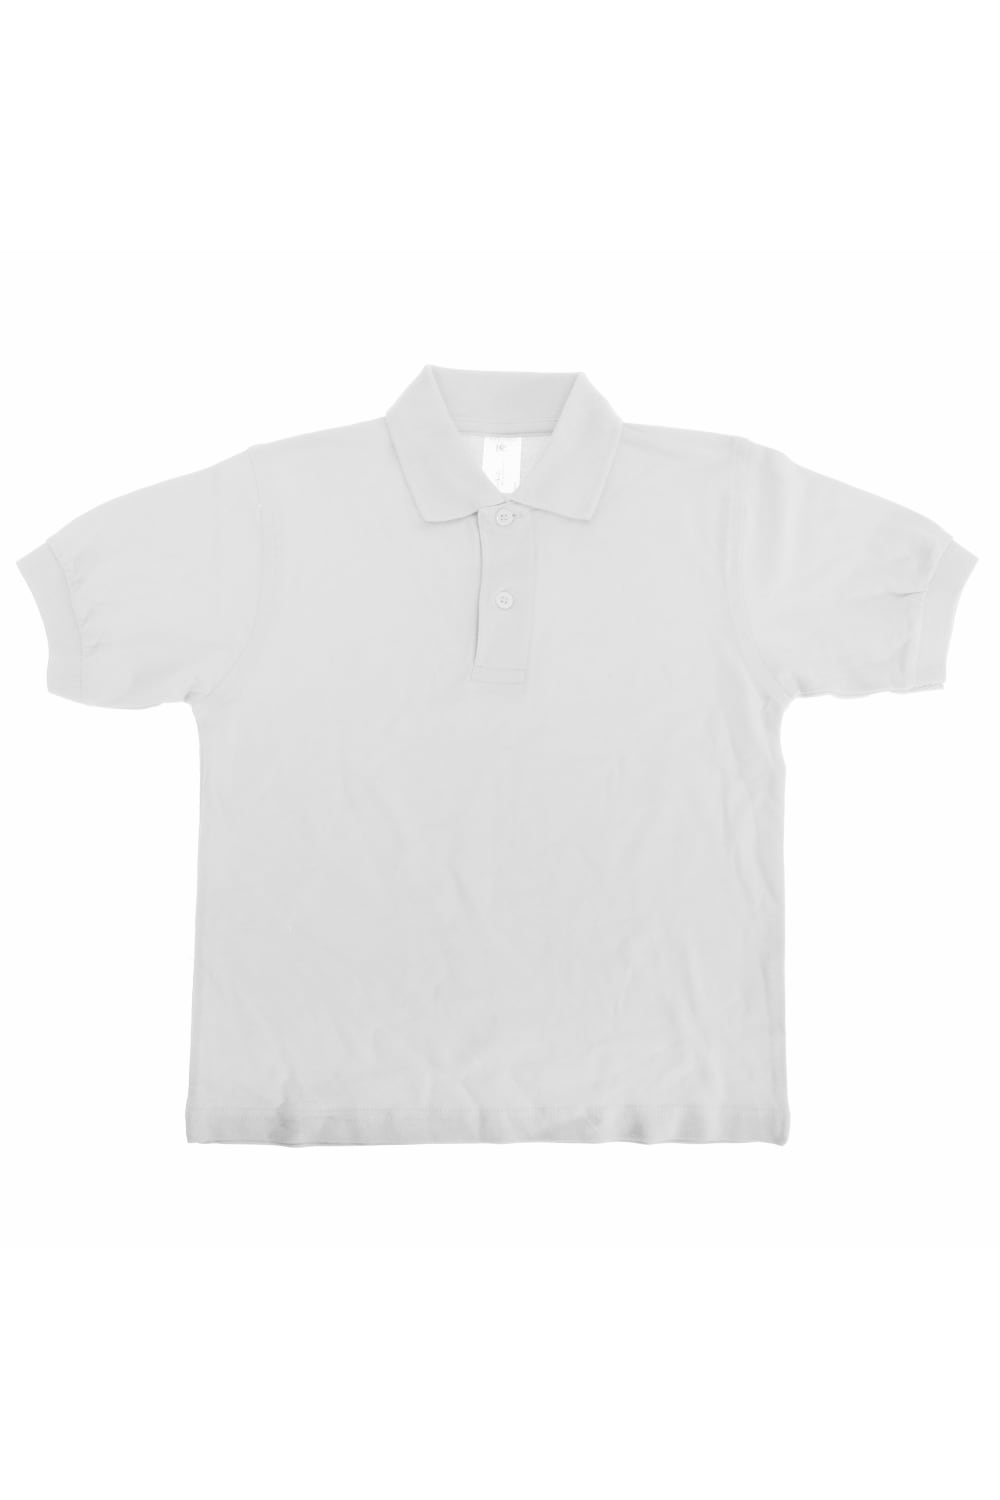 B&C Big Girls Kids/Childrens Safran Polo Shirt (White)